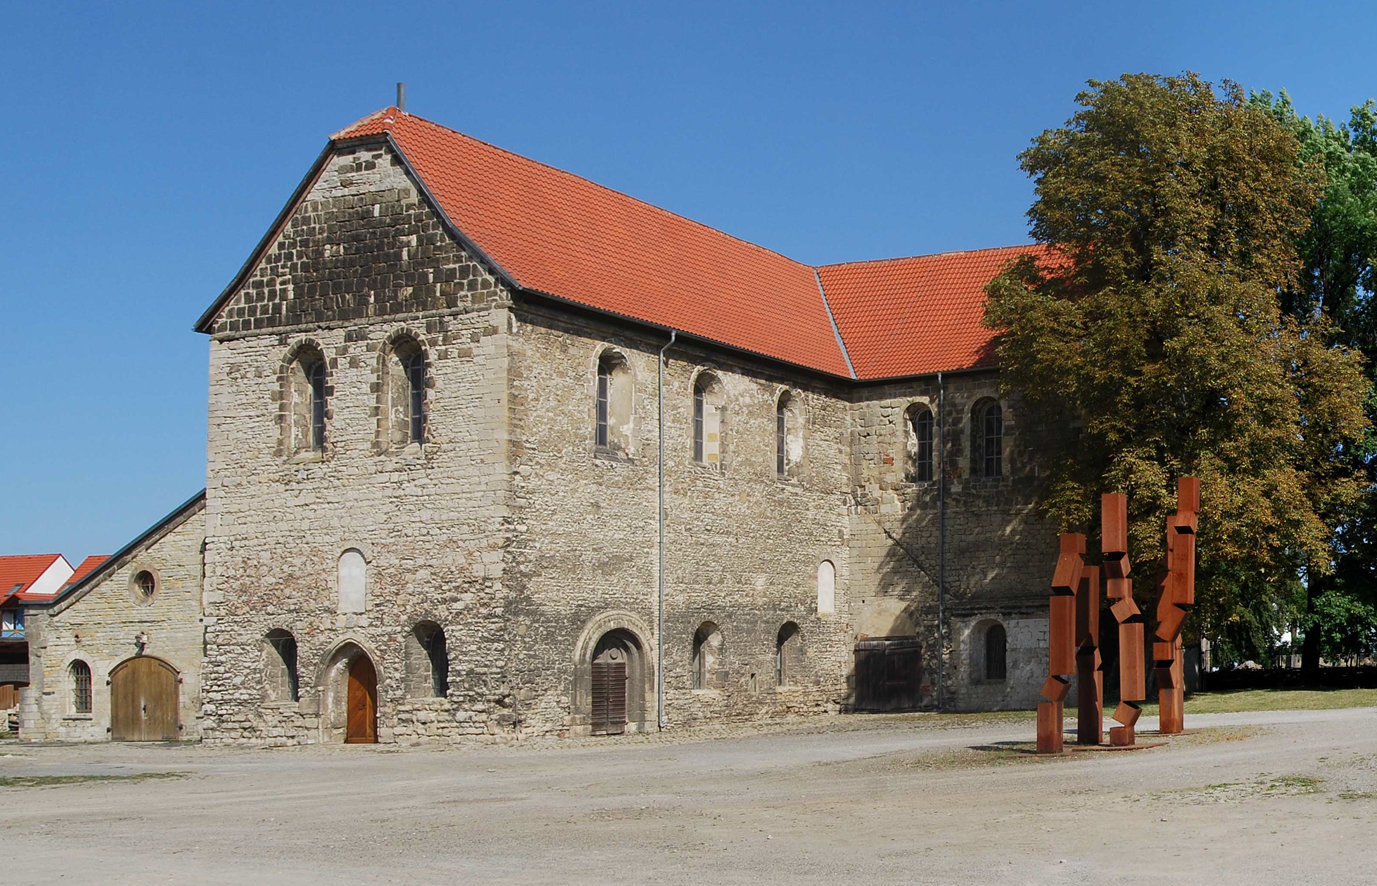 Burchardikirche in Halberstadt